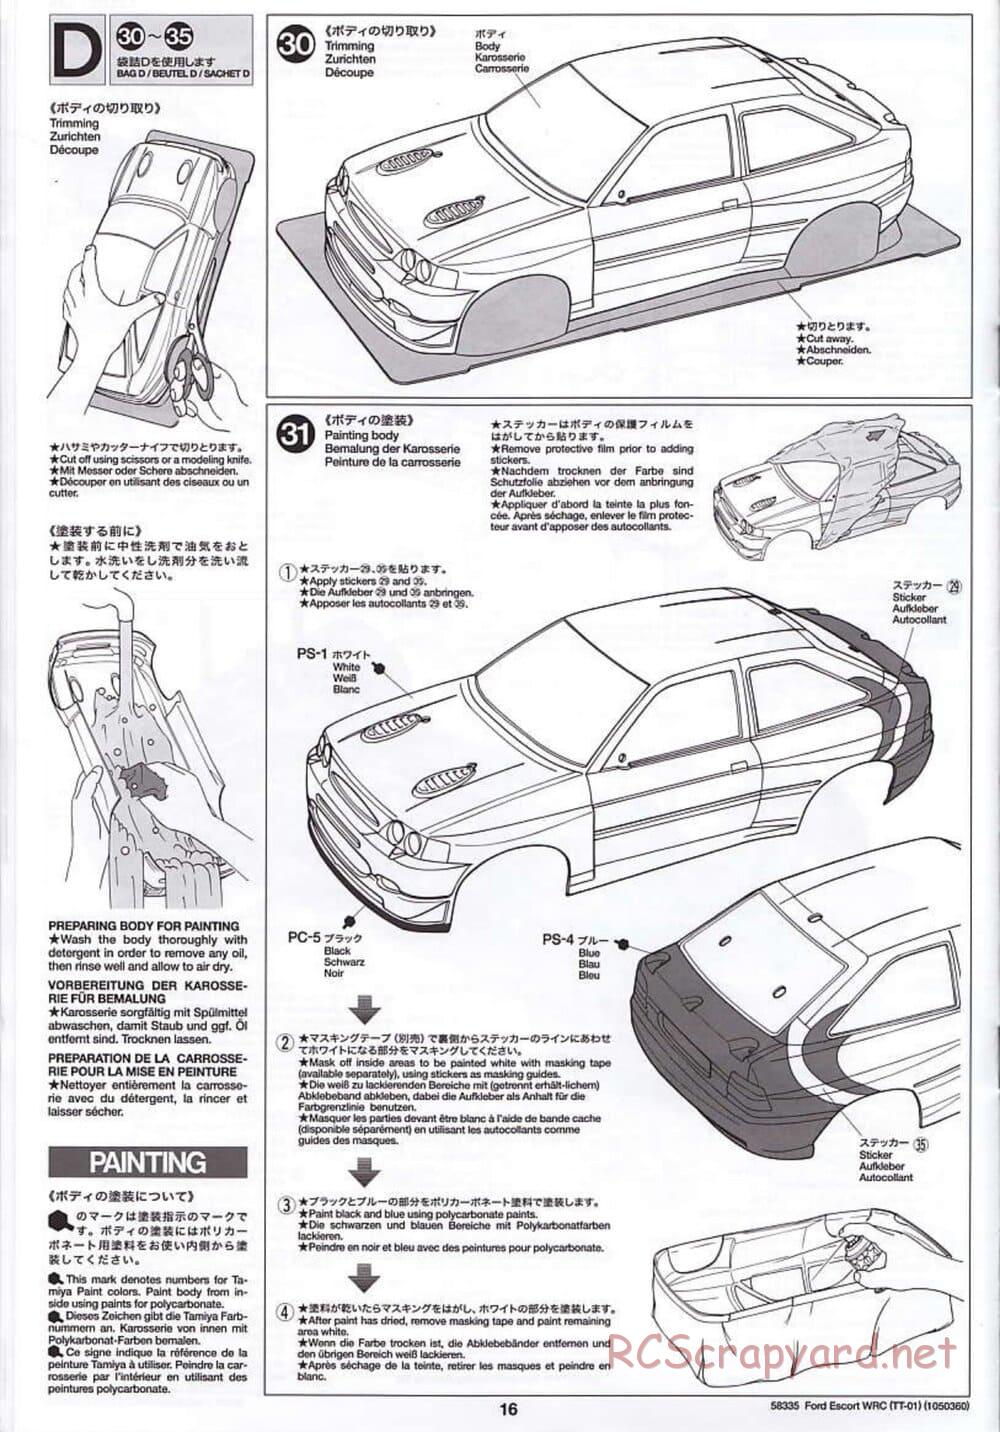 Tamiya - Ford Escort WRC - TT-01 Chassis - Manual - Page 16